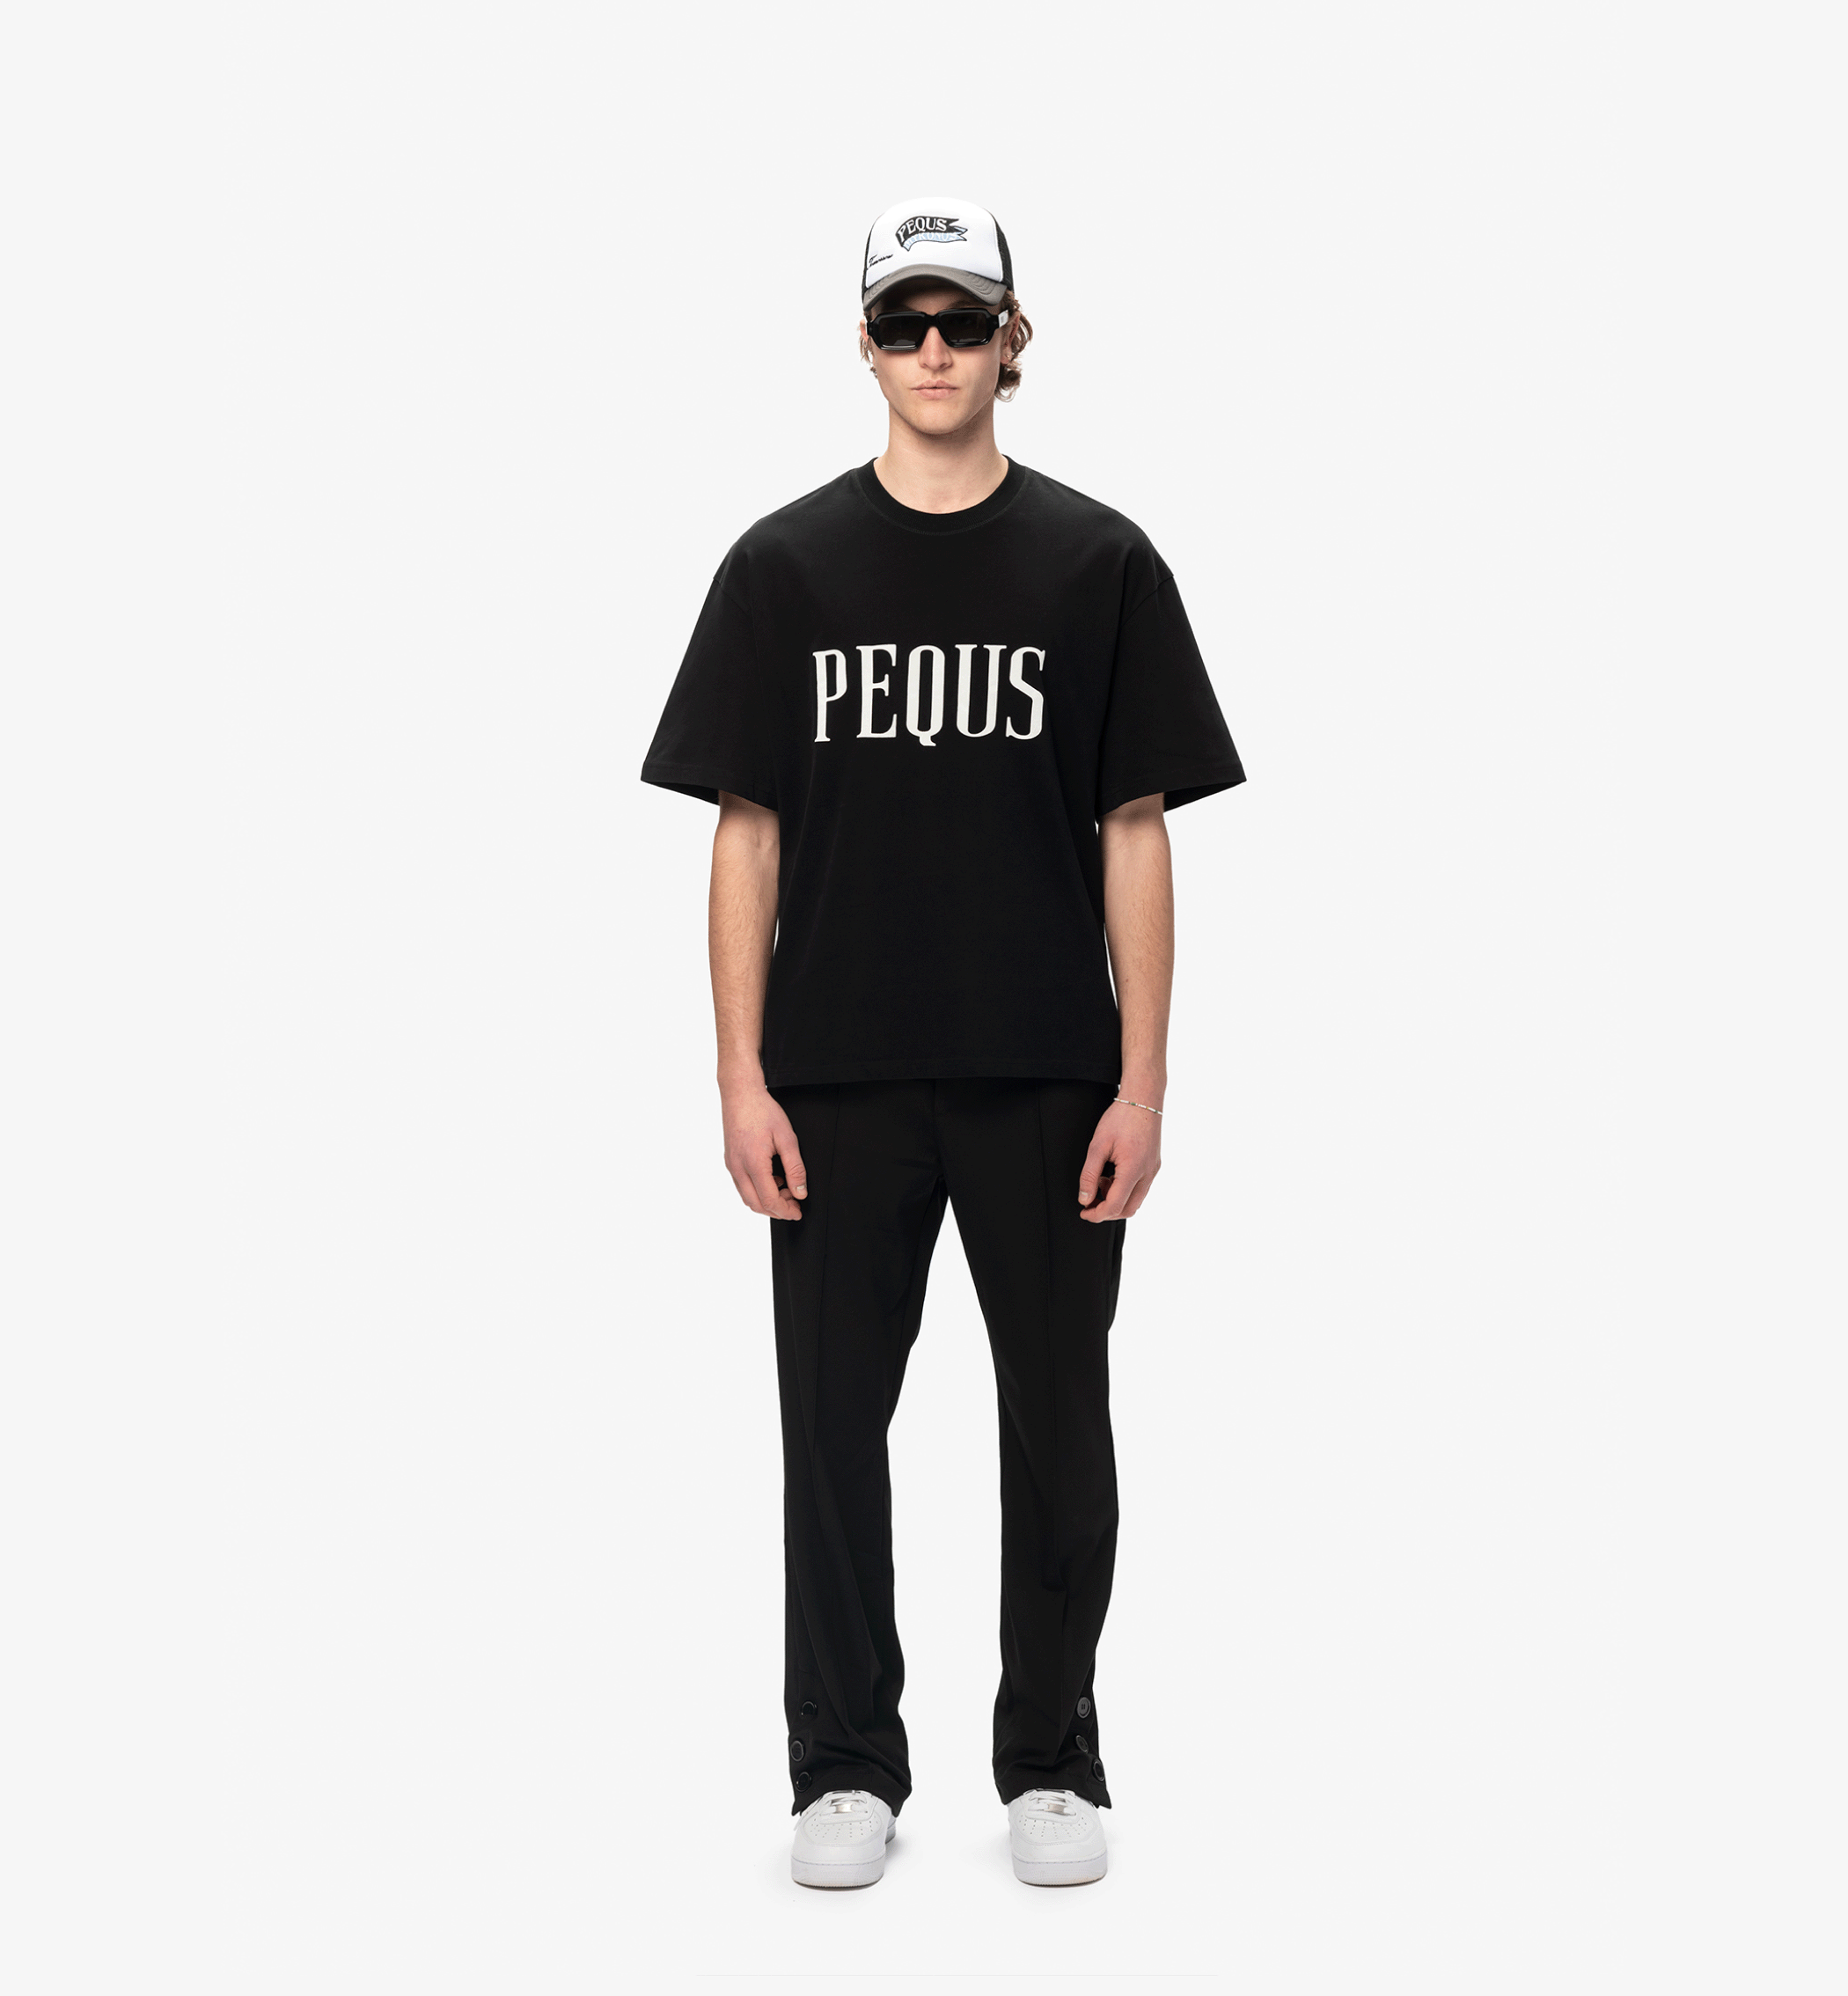 PEQUS Logo T-Shirt